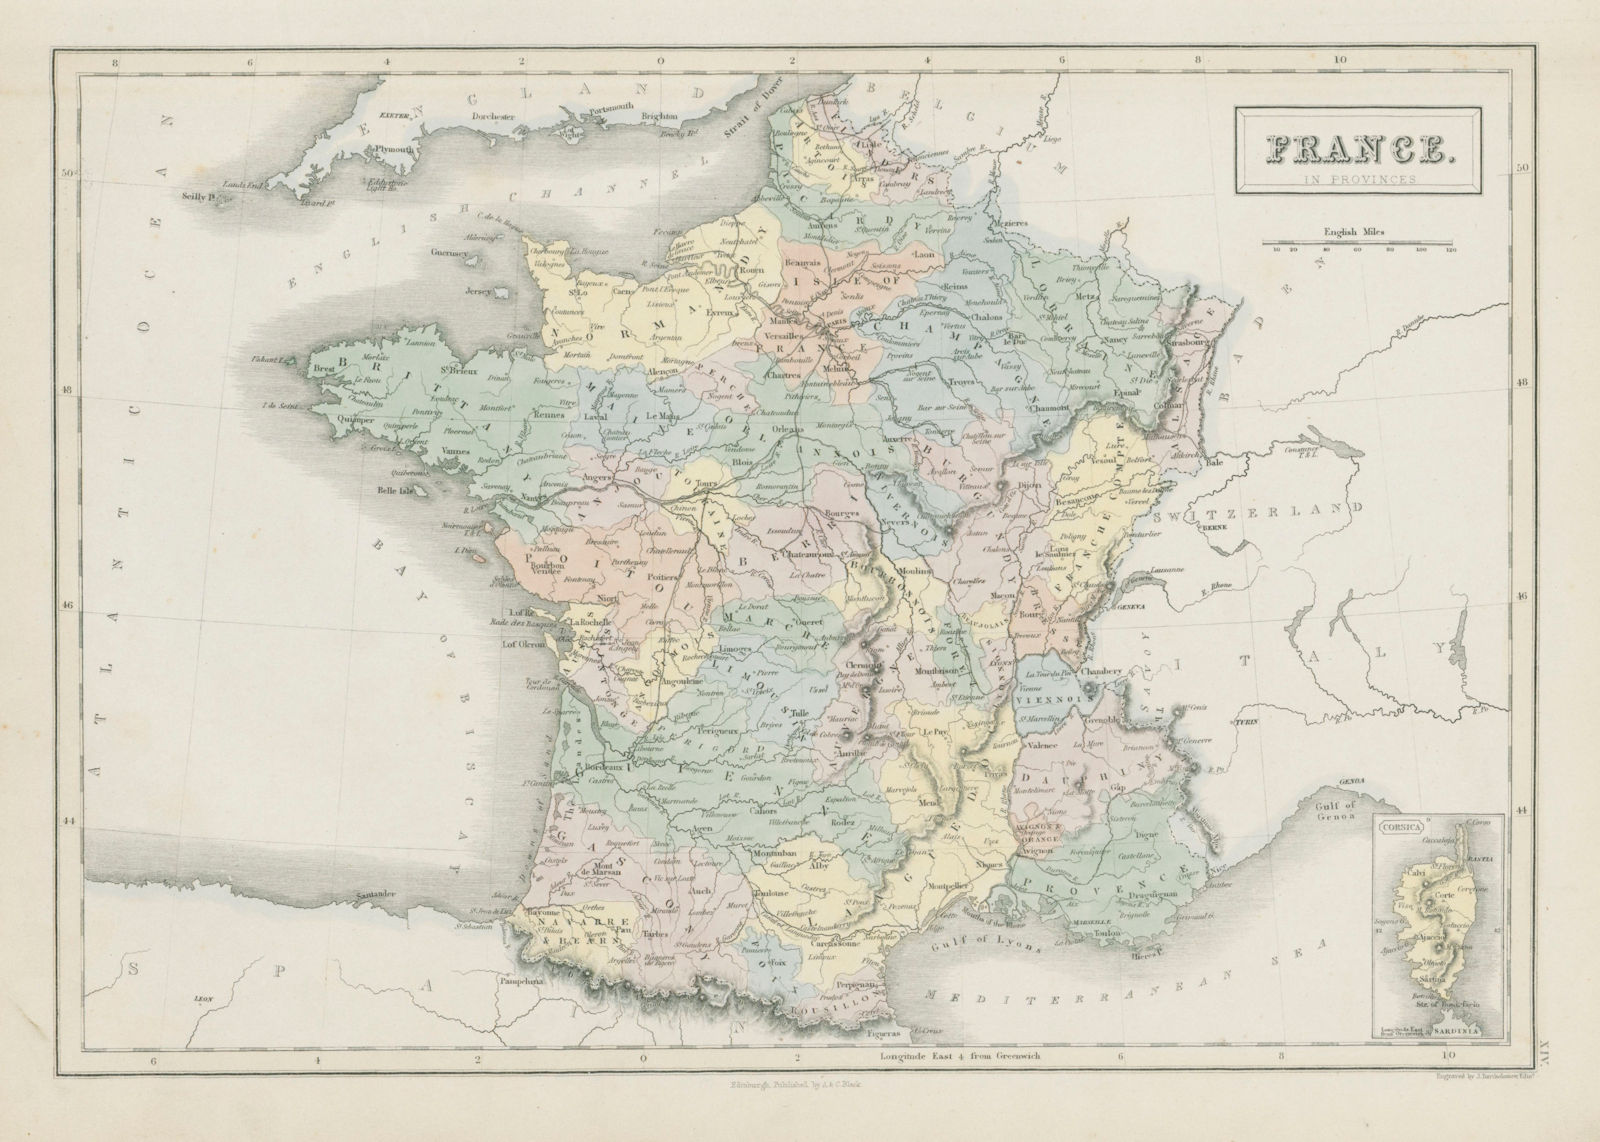 Associate Product France in provinces showing railways. JOHN BARTHOLOMEW 1856 old antique map